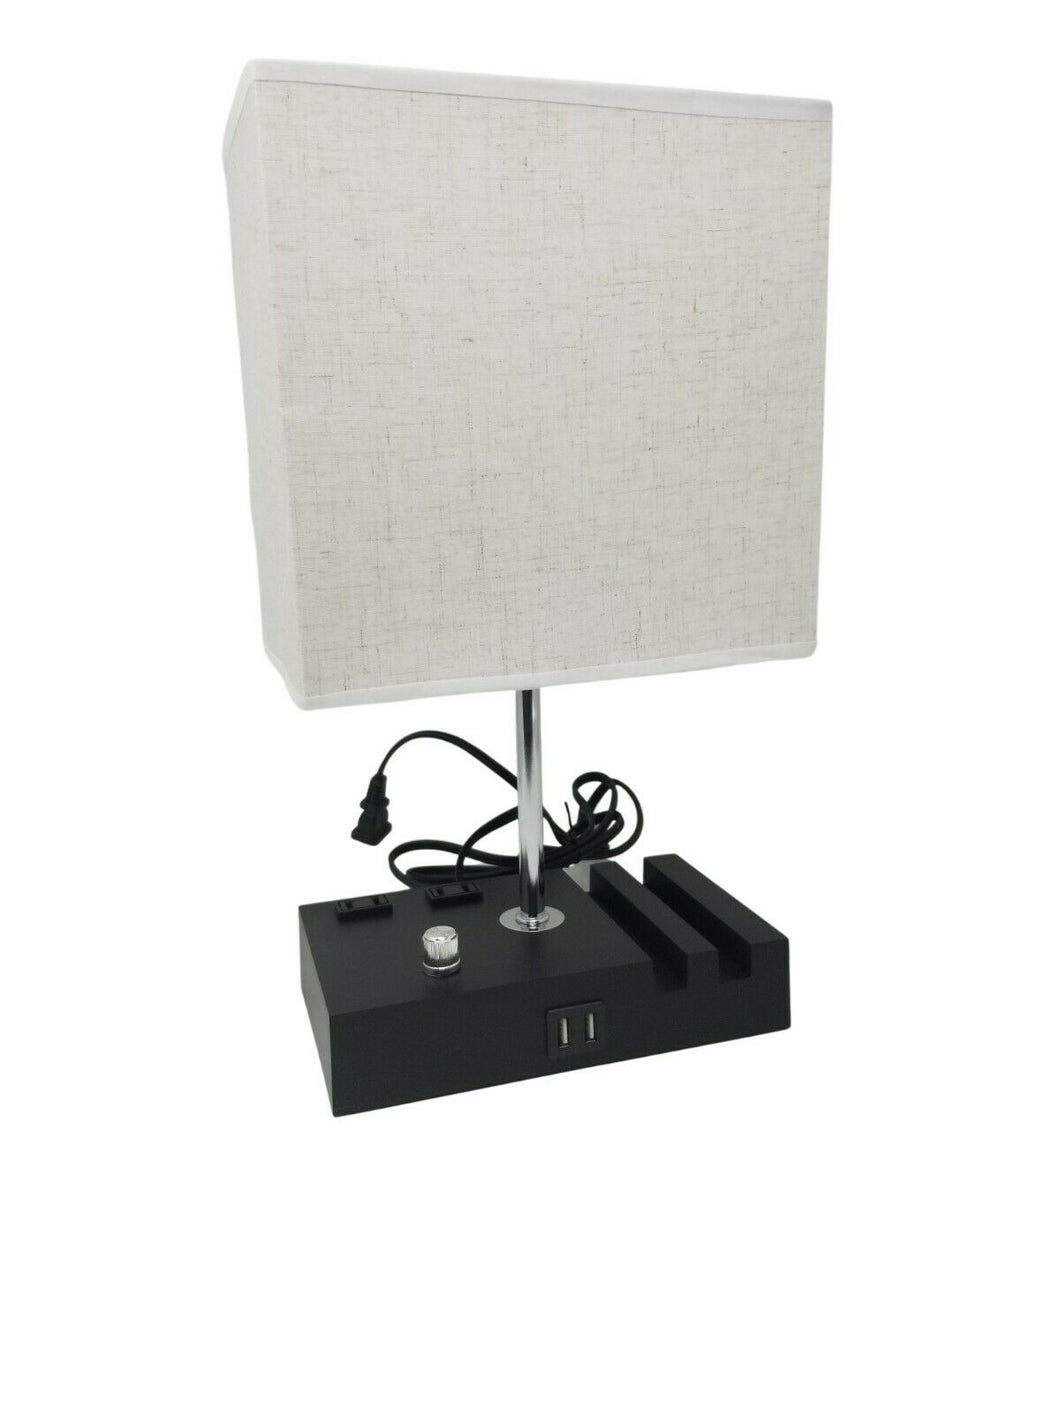 UHD 4k WiFI P2P Lamp Charging Station Bedside Hidden Spy Camera